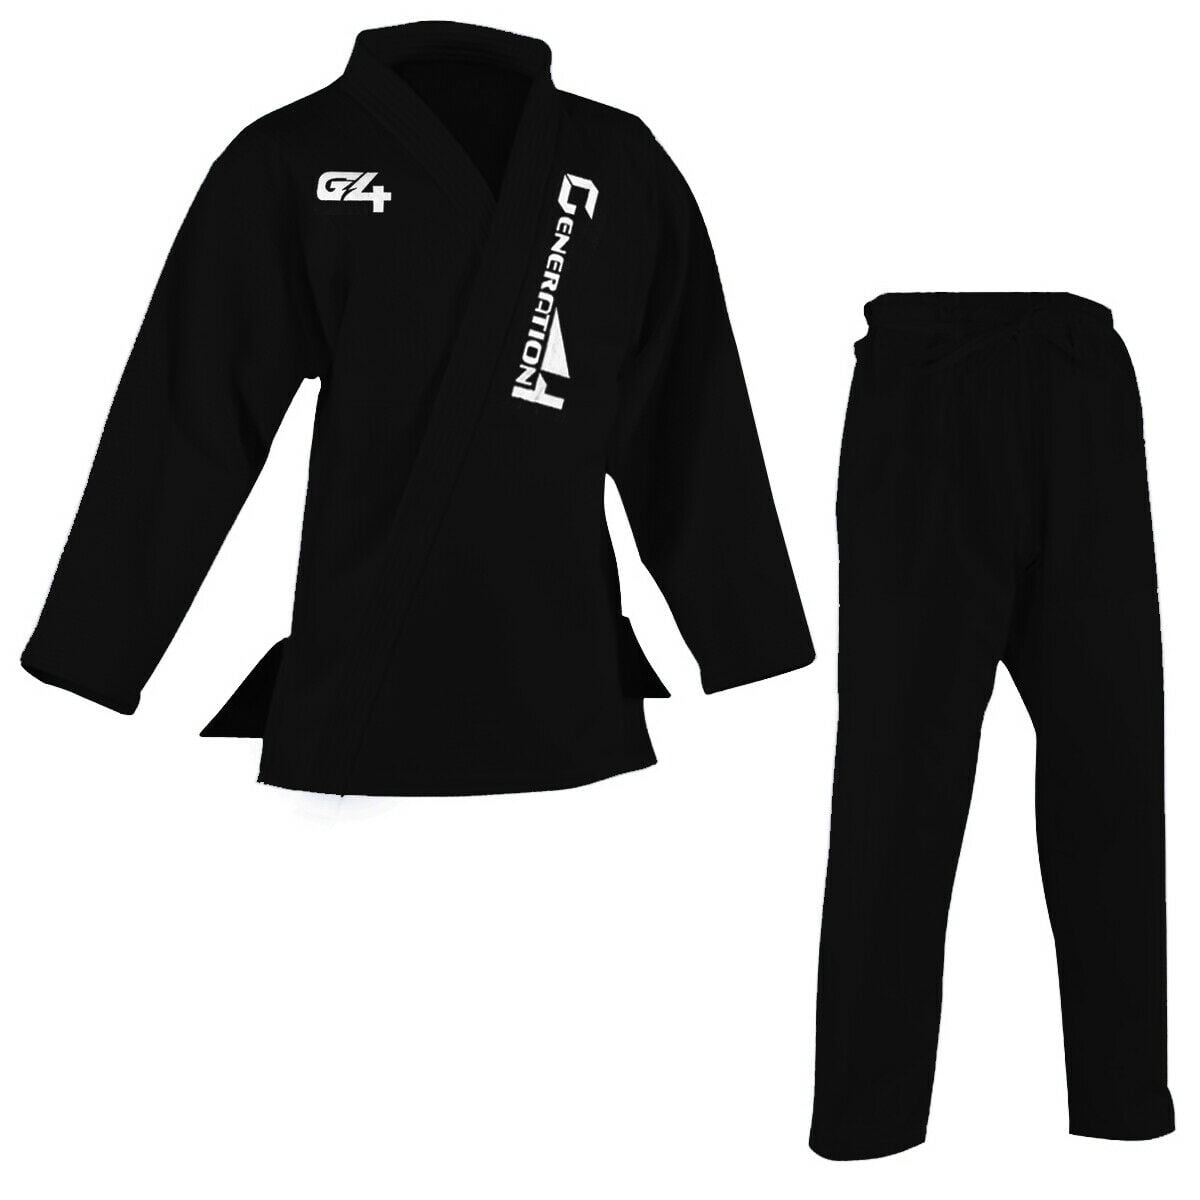 100% Cotton Black w Flags Kids / Youth BJJ Uniform Free Shipping Jiu Jitsu Gi 